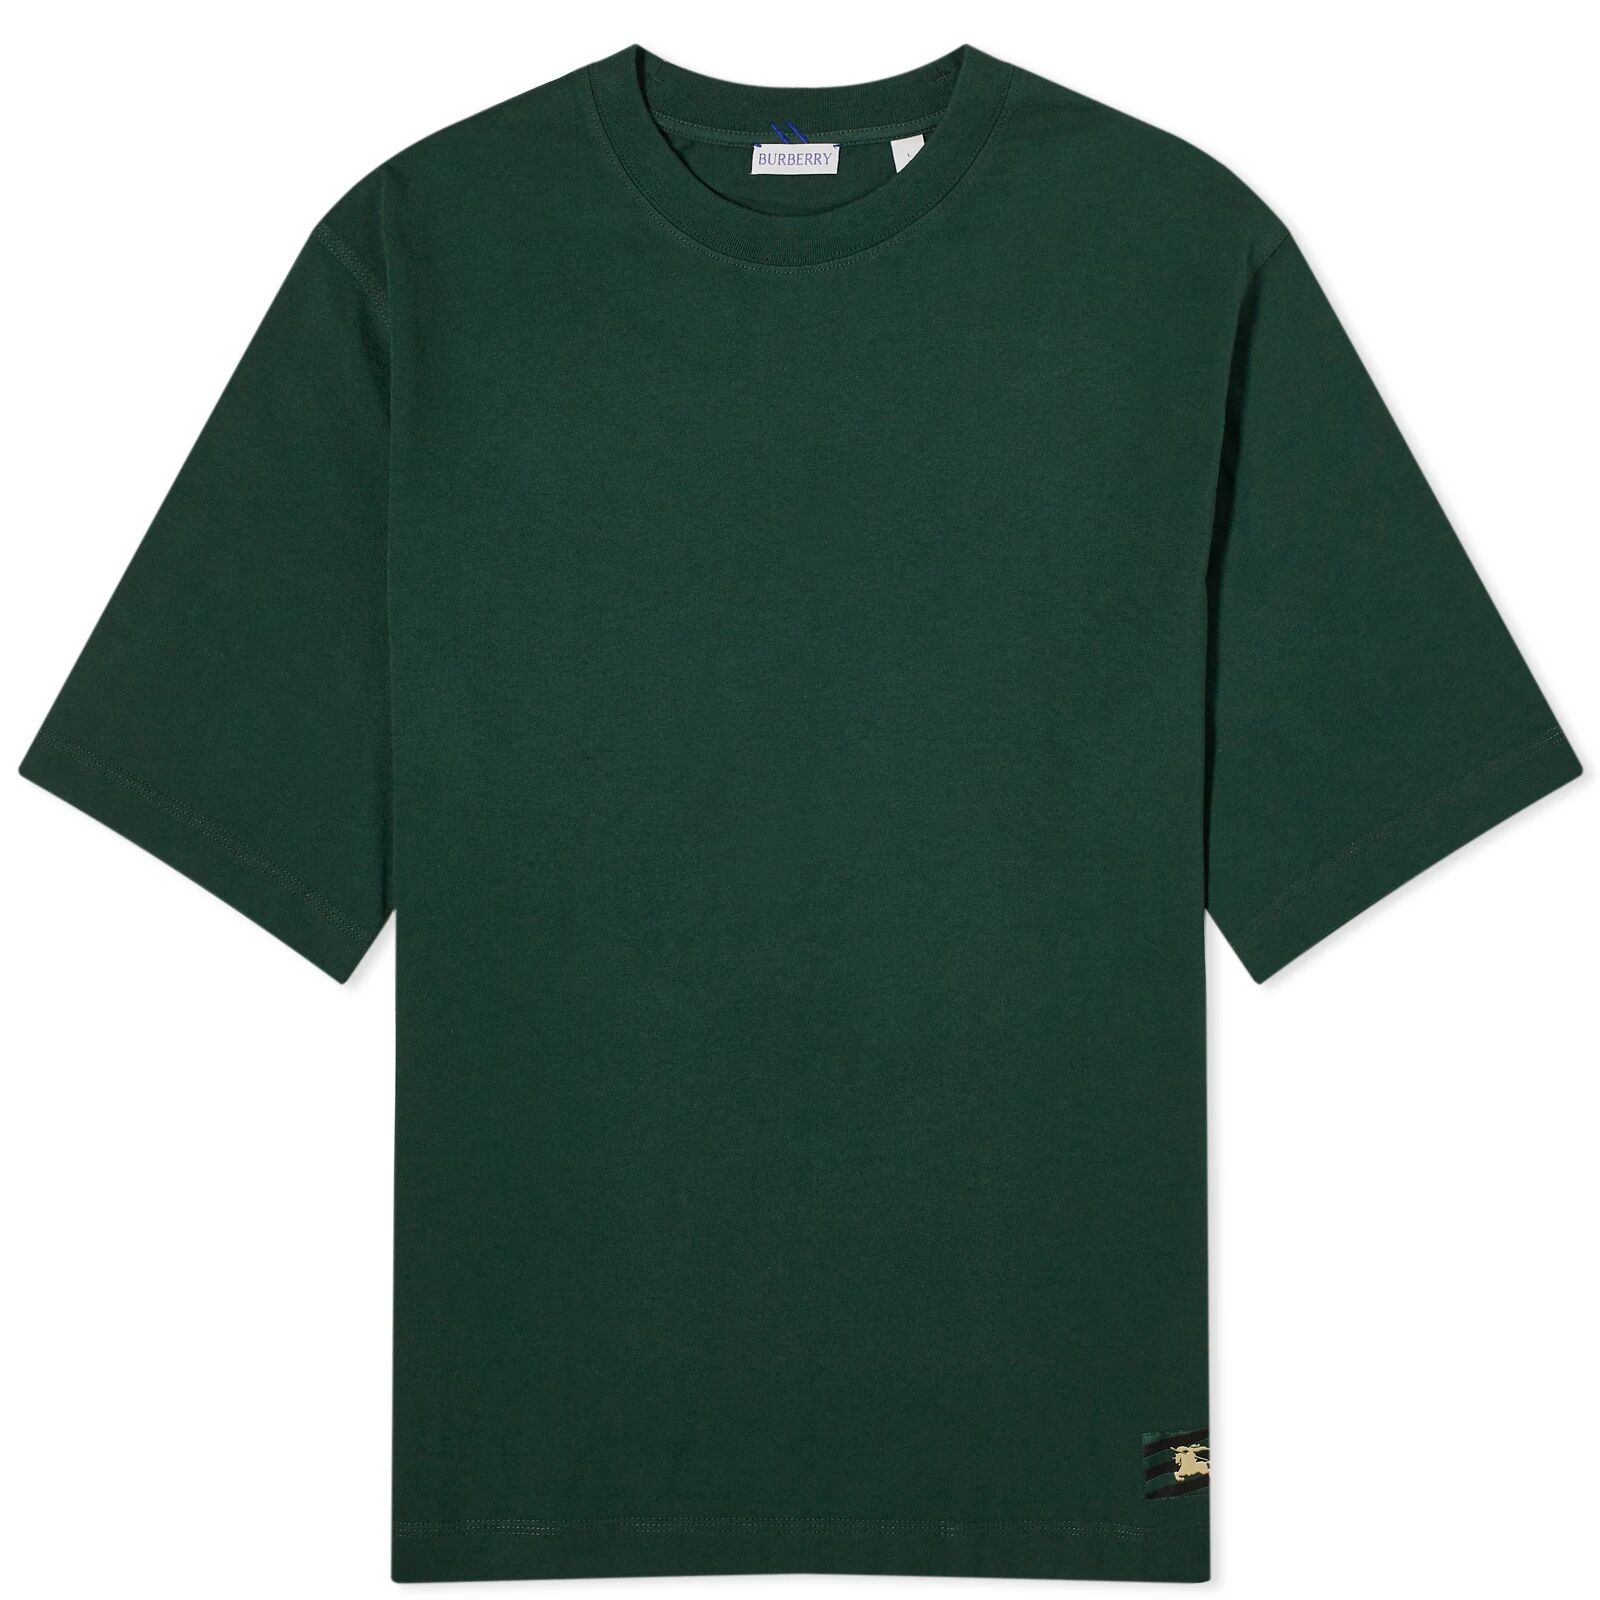 Burberry Men's EKD Label T-Shirt in Ivy, Size Medium